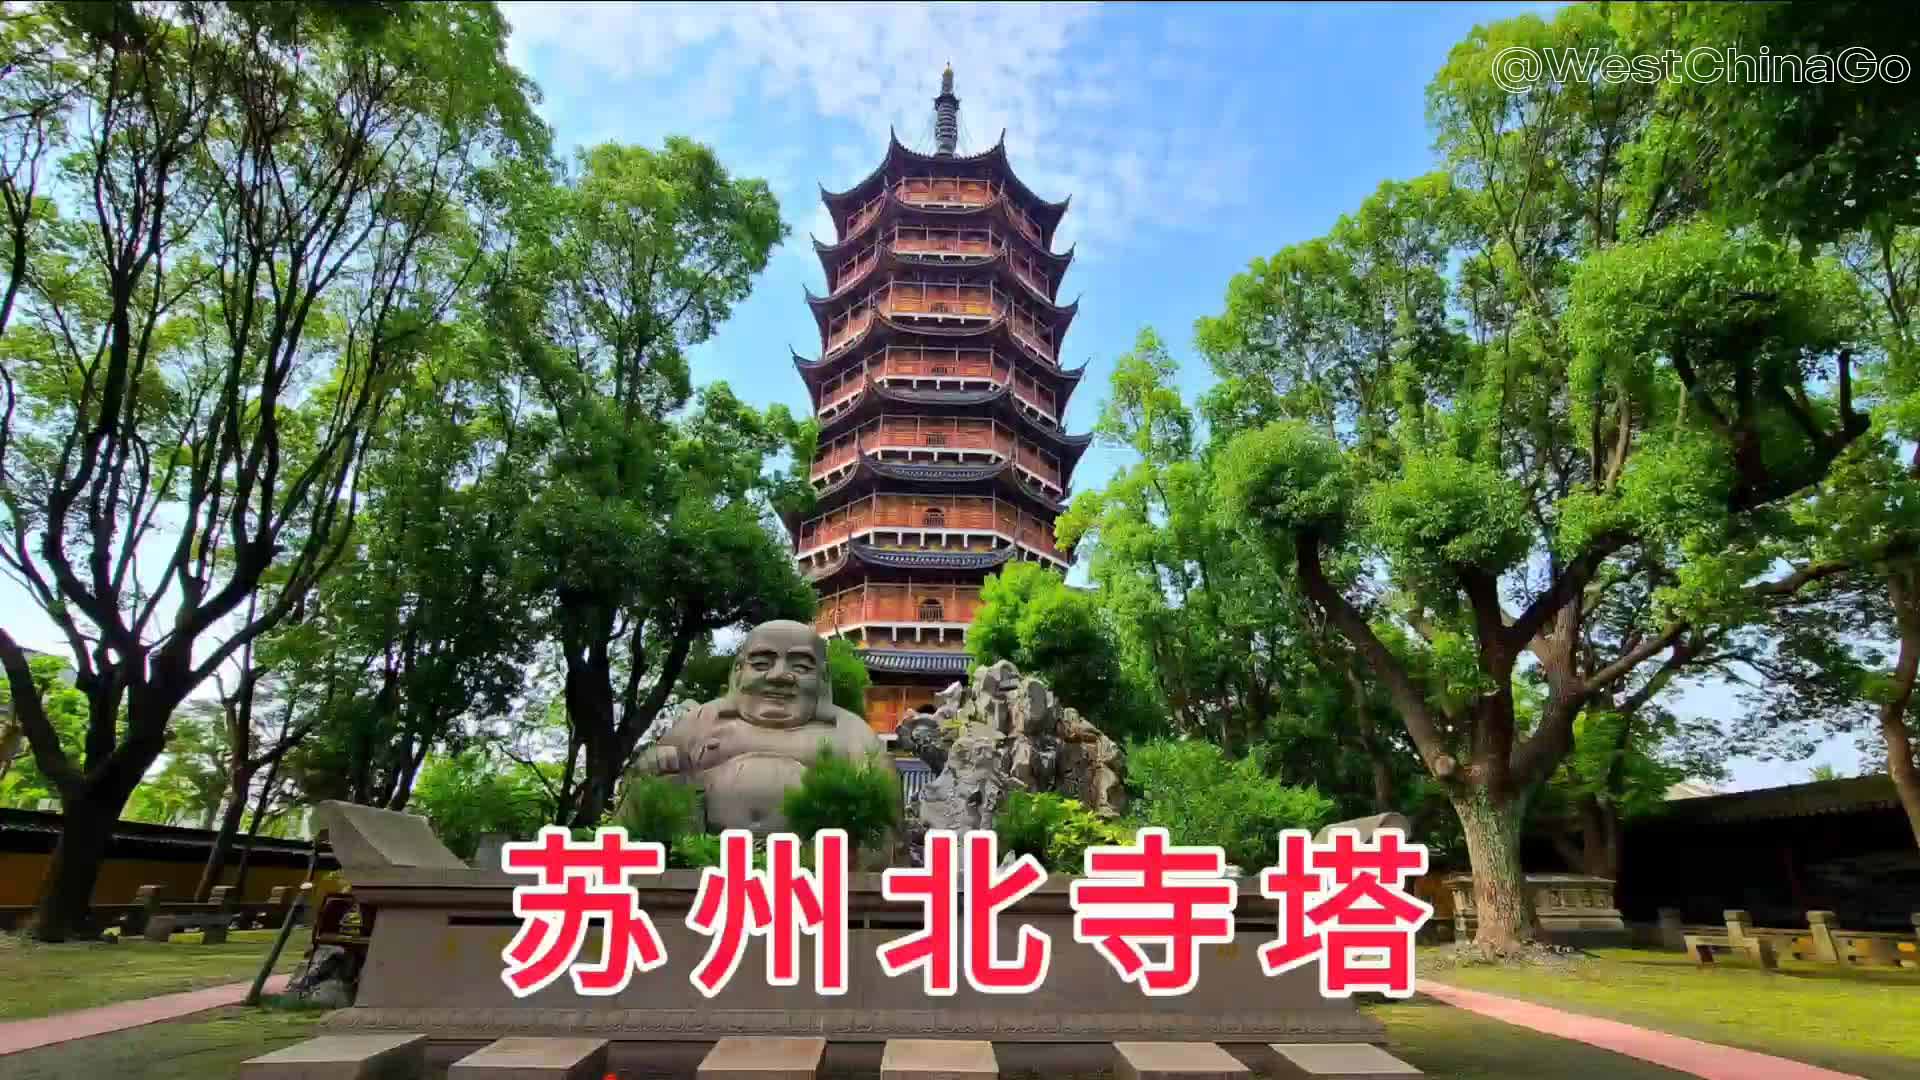 Suzhou Beisita